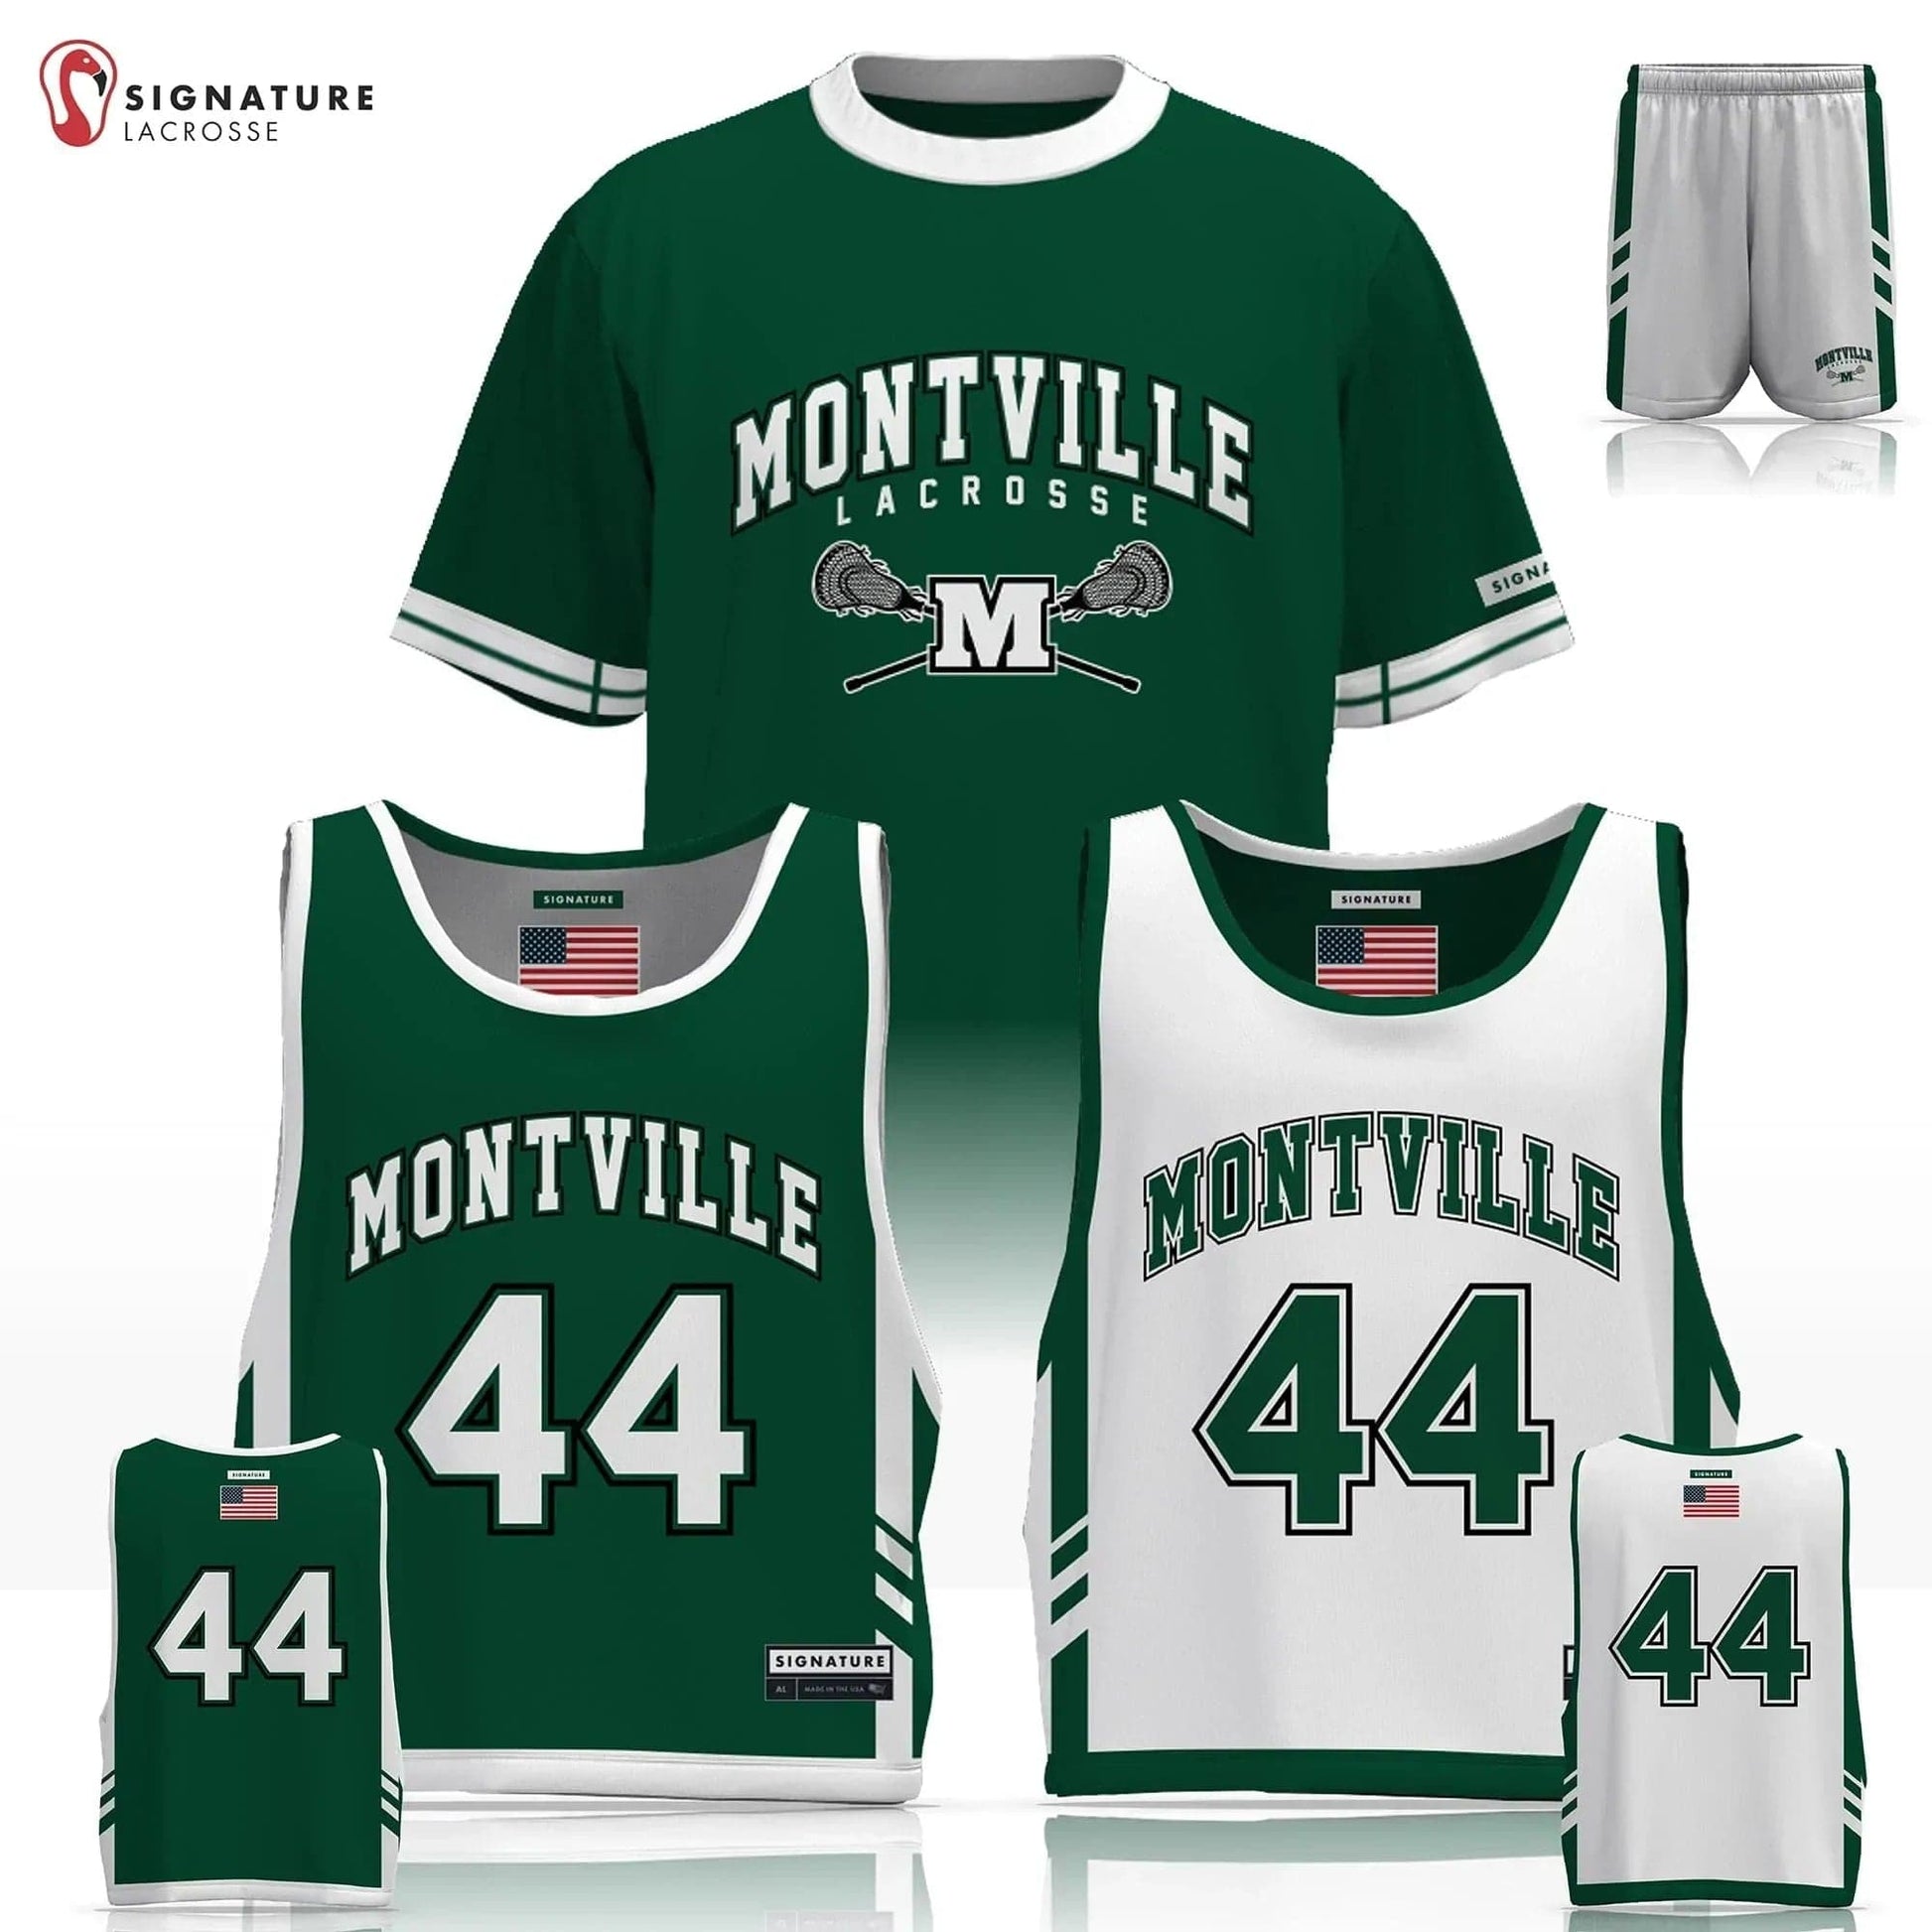 Montville Lacrosse Men's 4 Piece Player Game Package: 7th Grade Signature Lacrosse